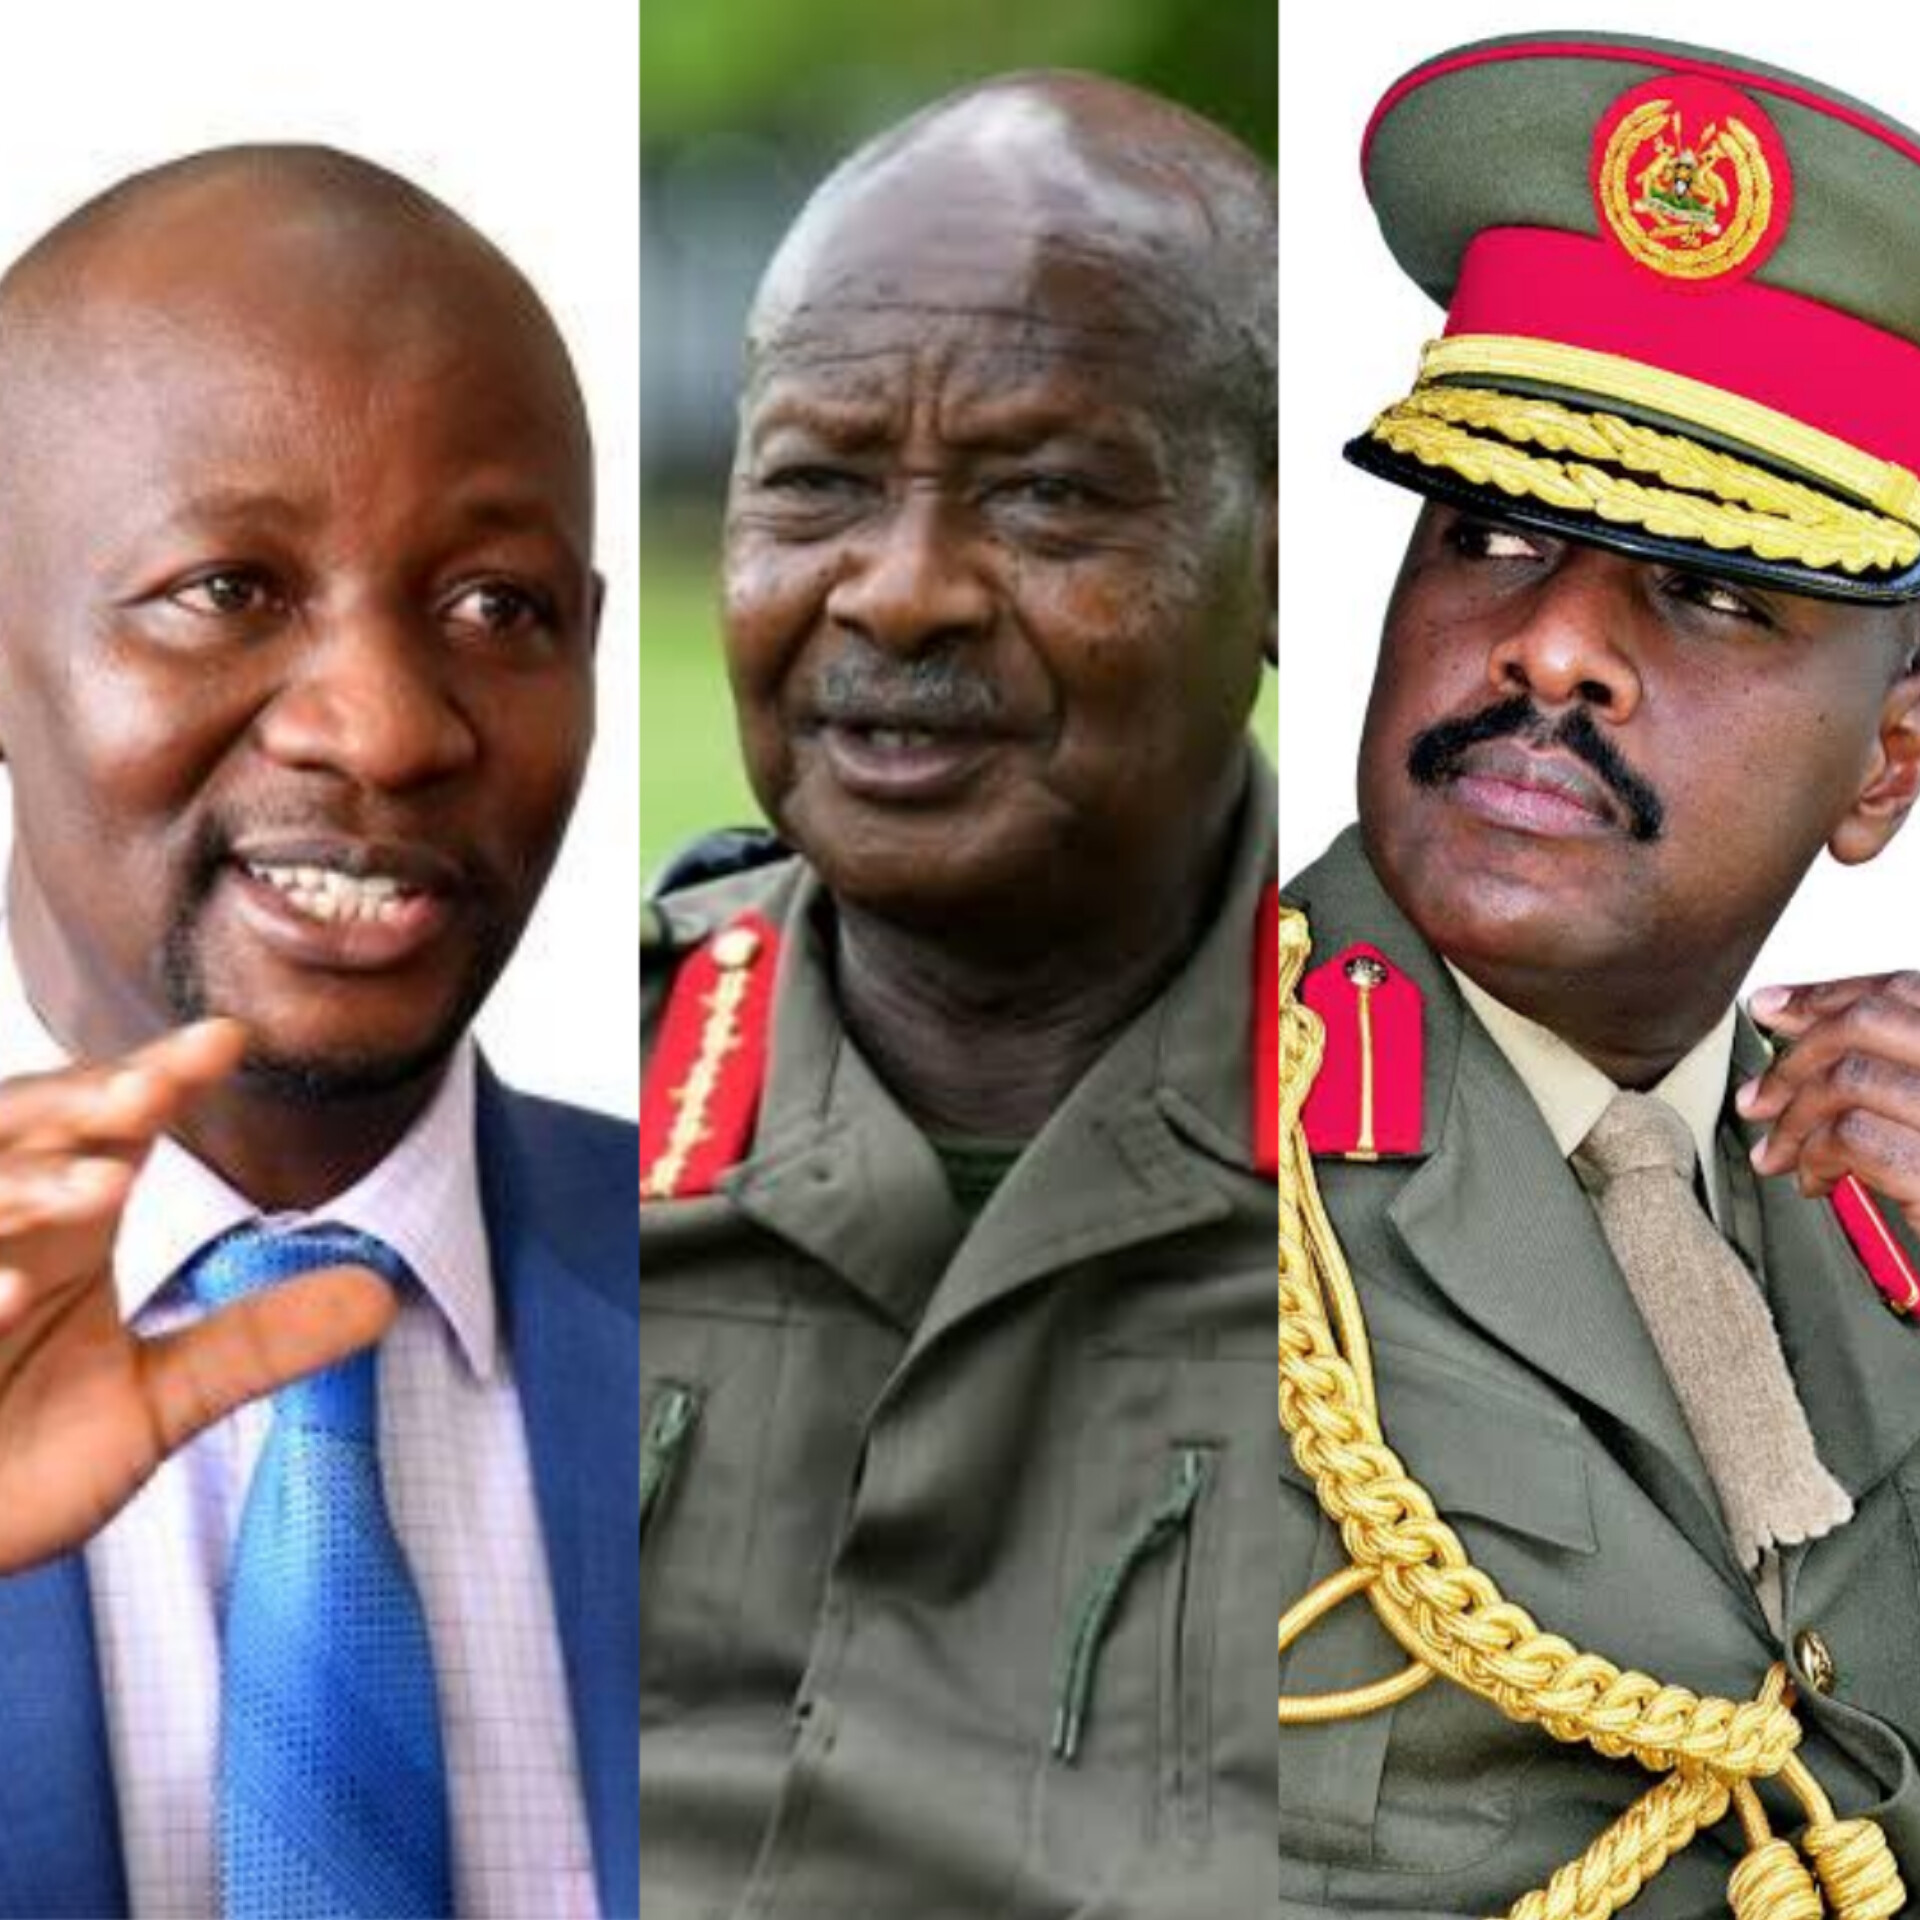 2026 Hopes Dashed? MP Ssemujju Dismisses Muhoozi's Presidential Bid While Museveni Reigns